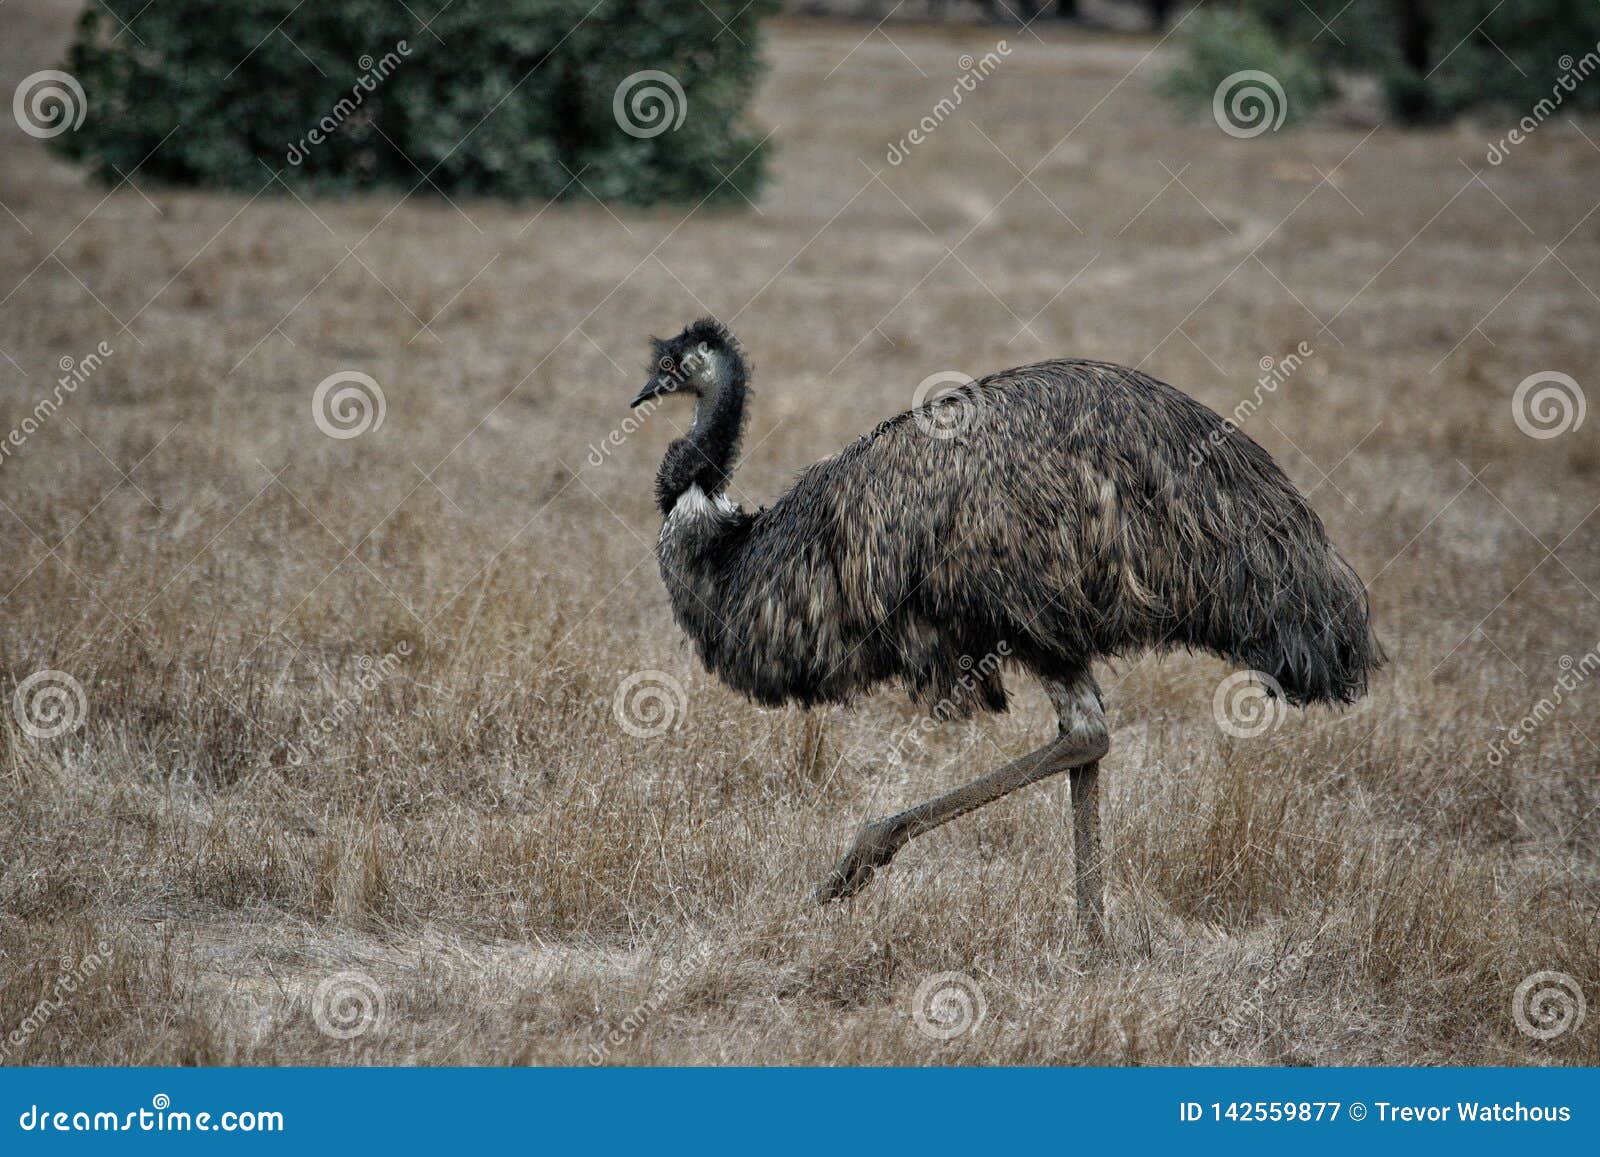 wild emu roaming in serendipity sanctuary, lara, victoria, australia